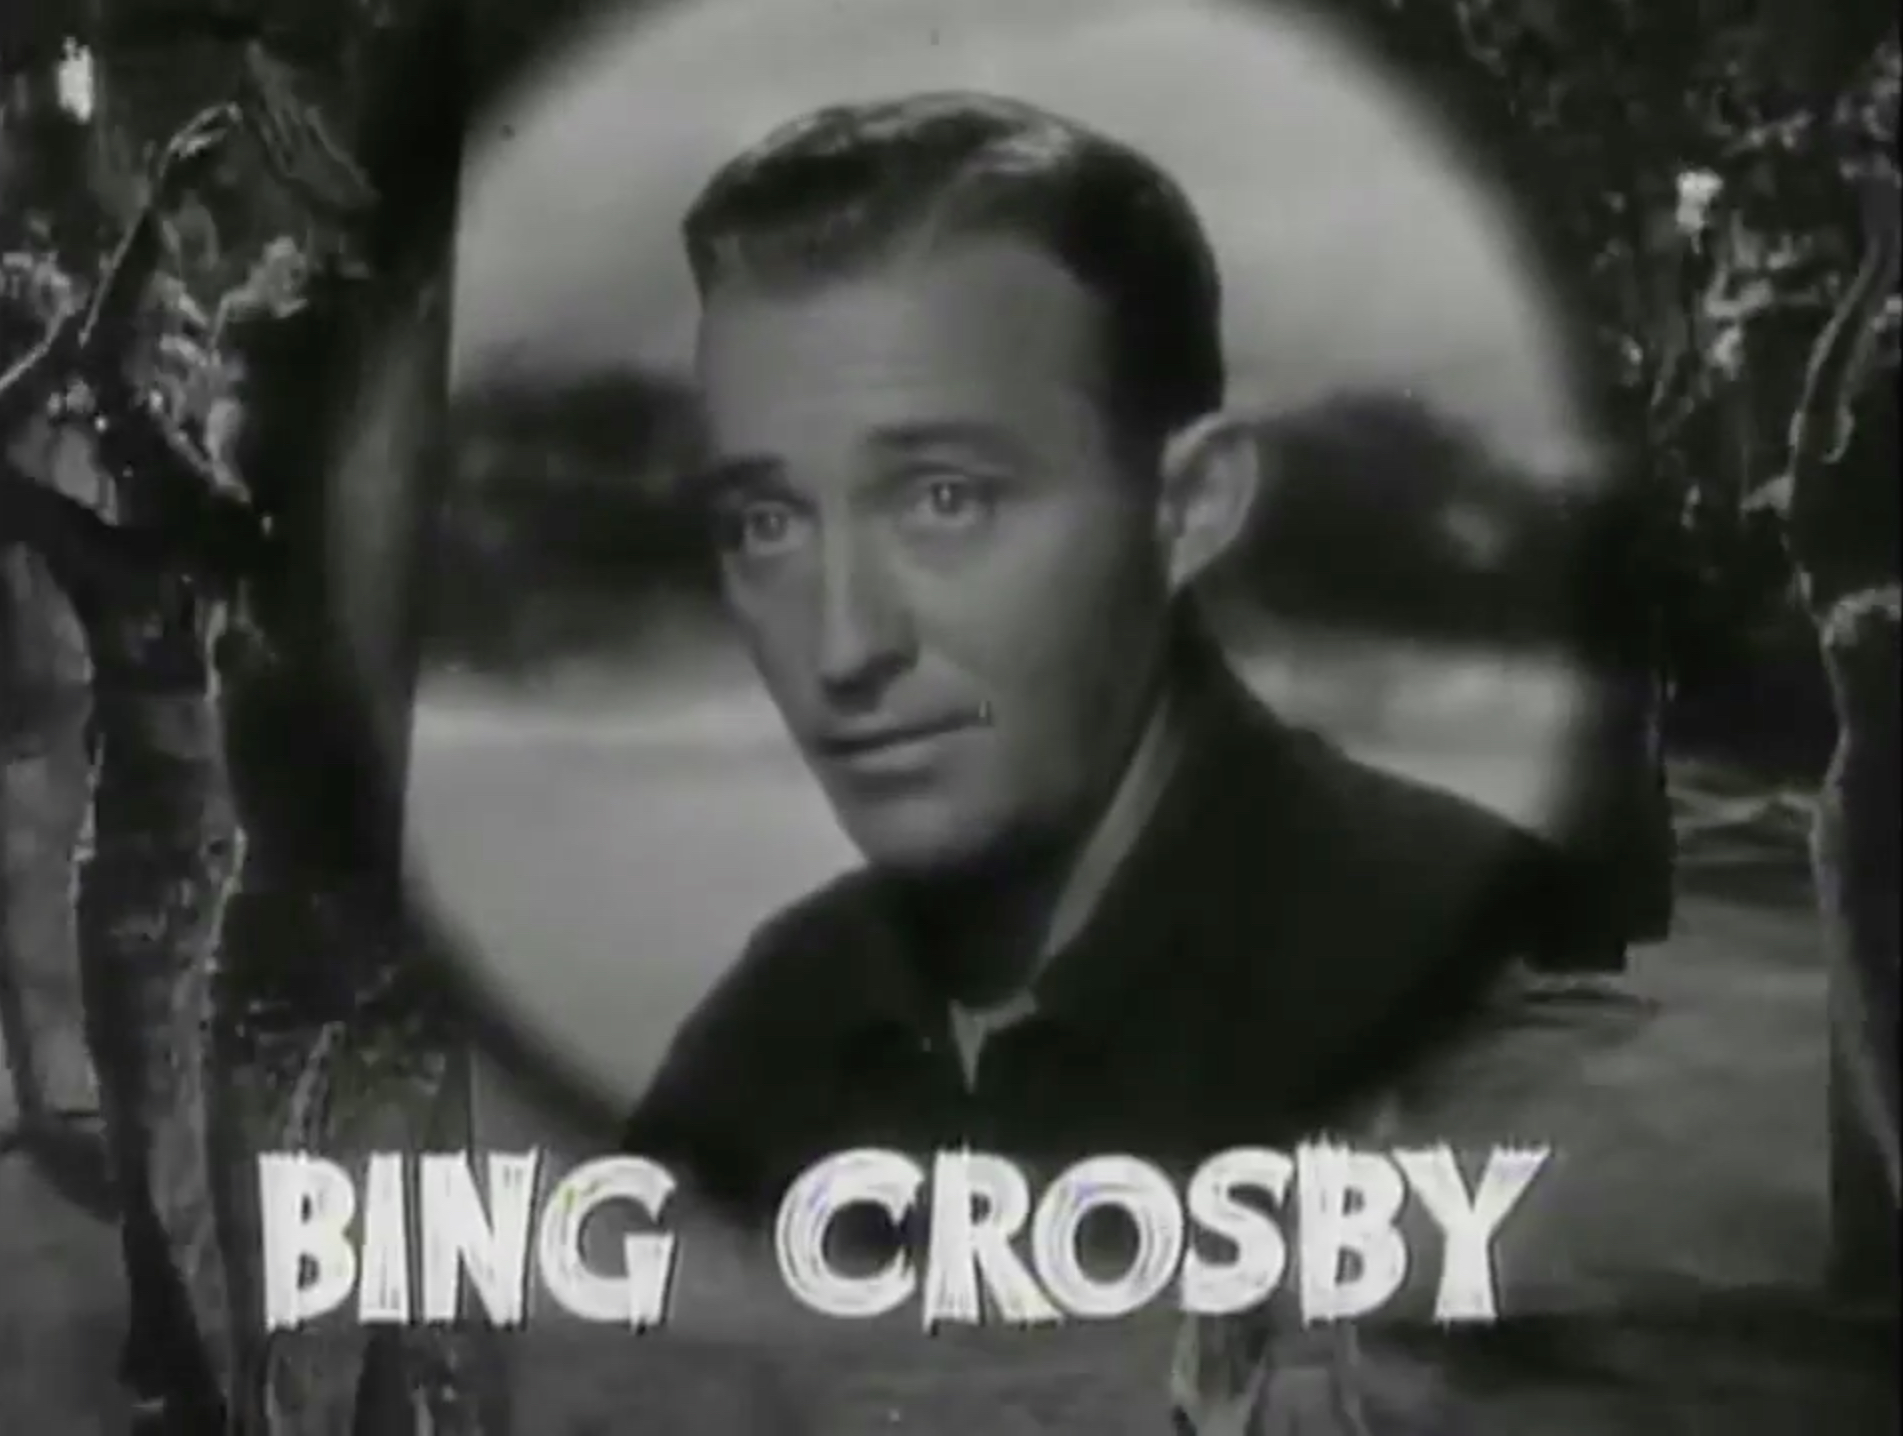 Bing Crosby   Wikipedia the free encyclopedia